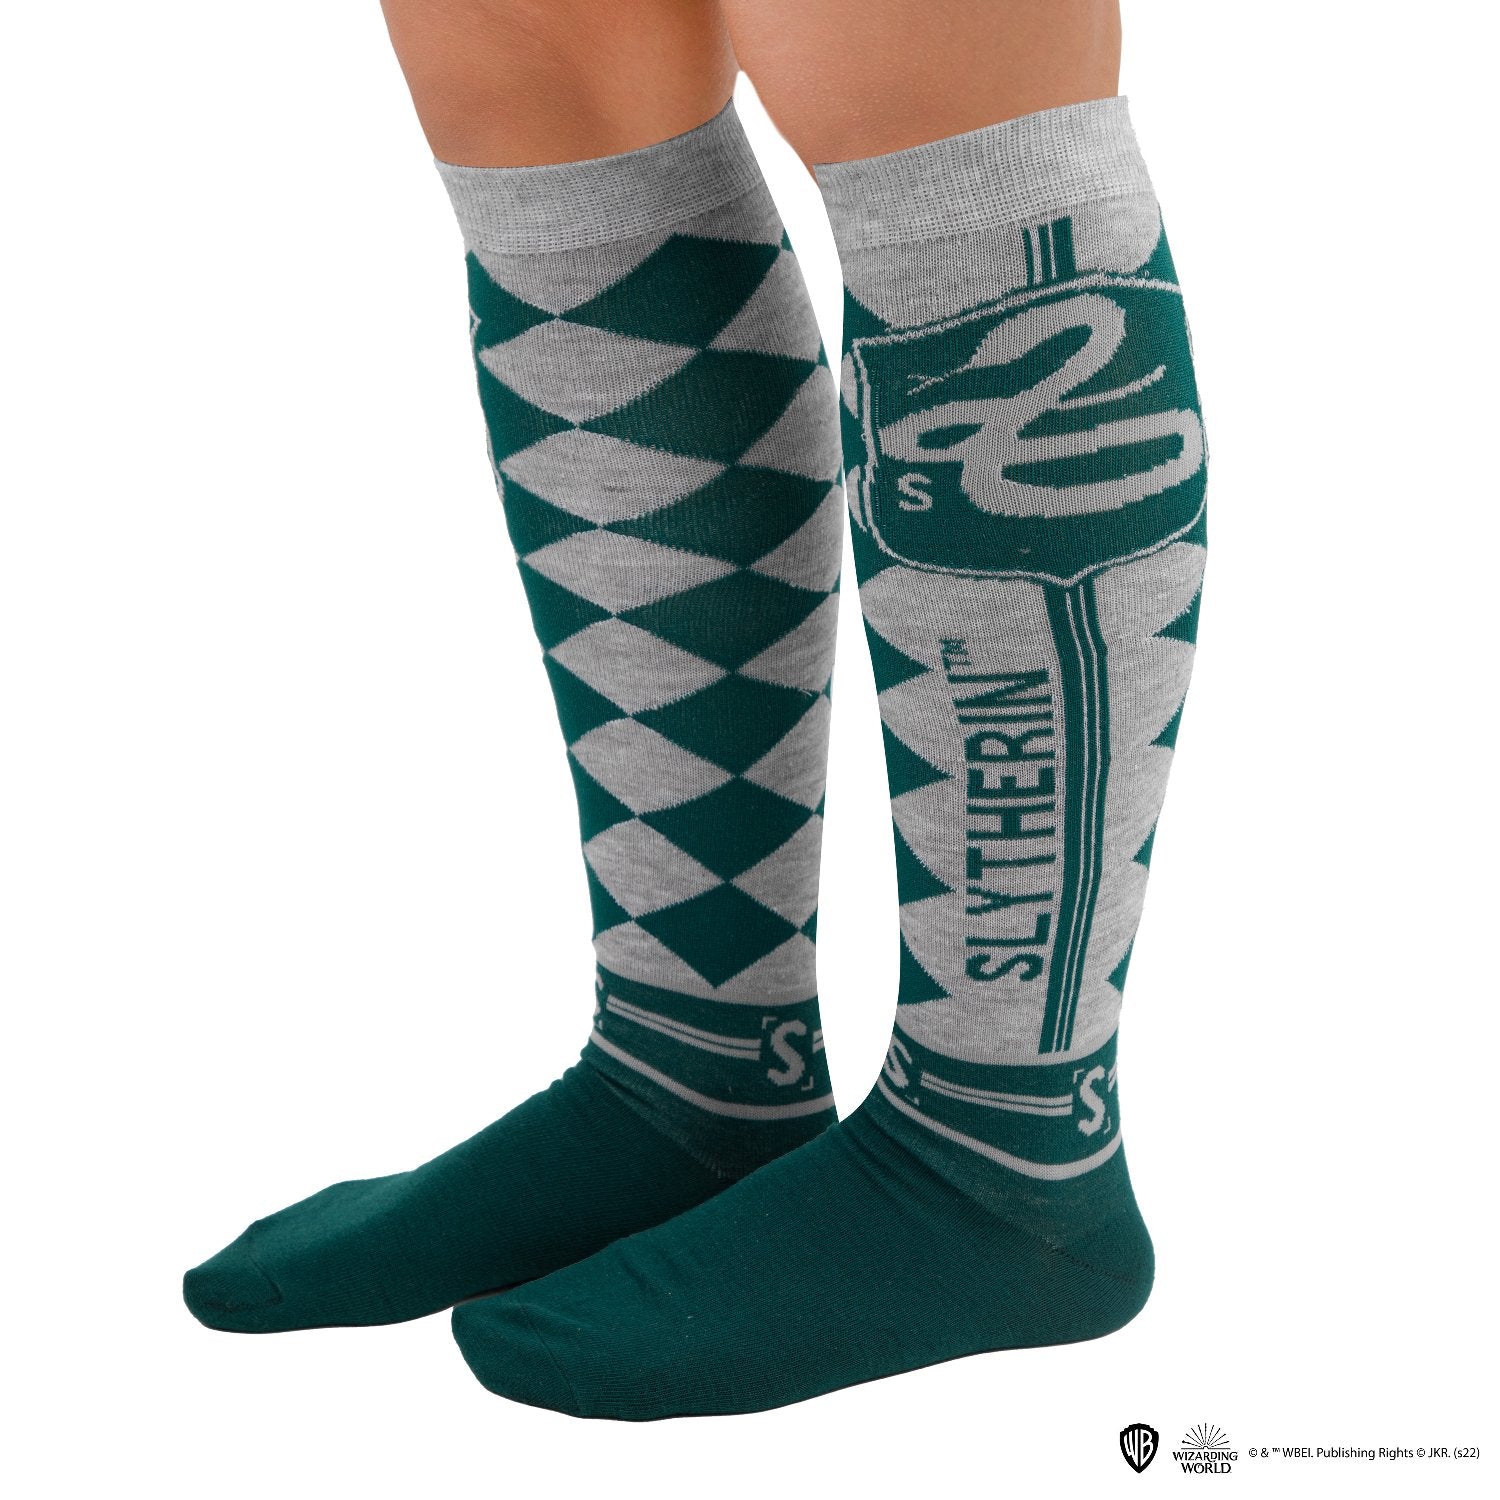  Harry Potter: Slytherin Knee High Socks Set of 3  4895205609228